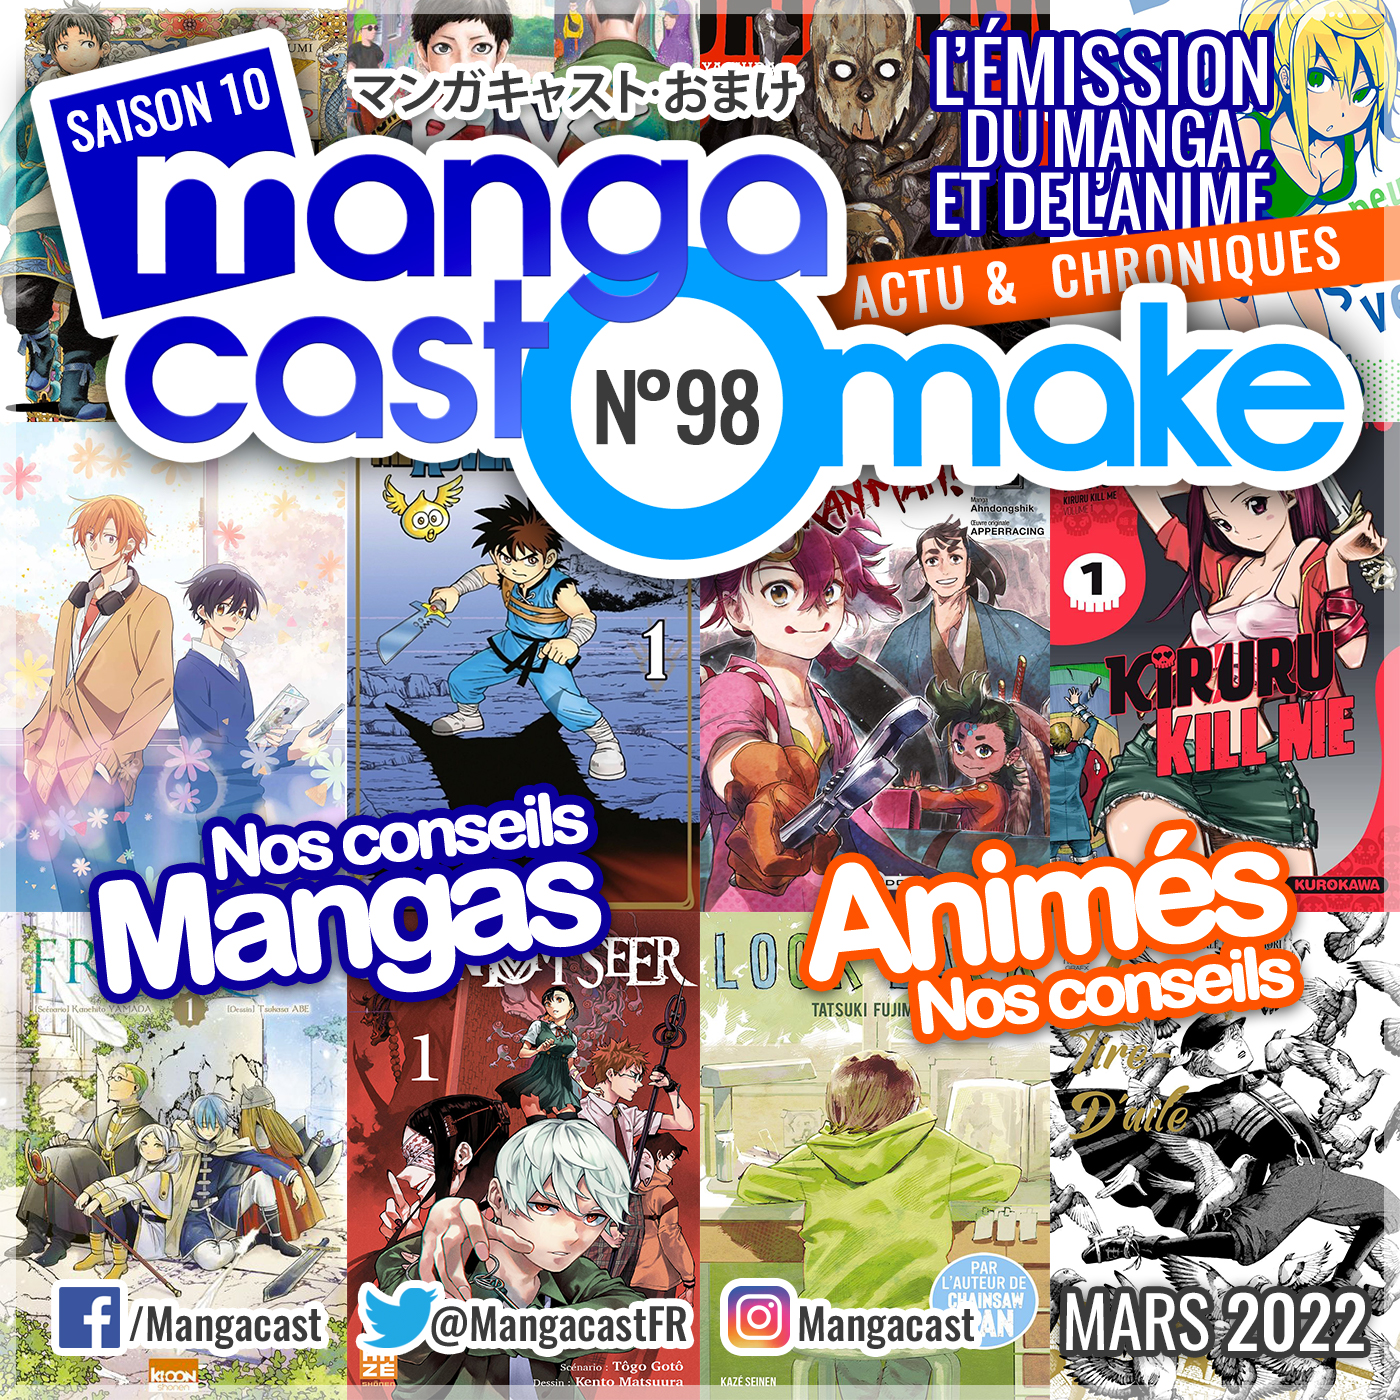 Cartouche du Mangacast Omake n°98